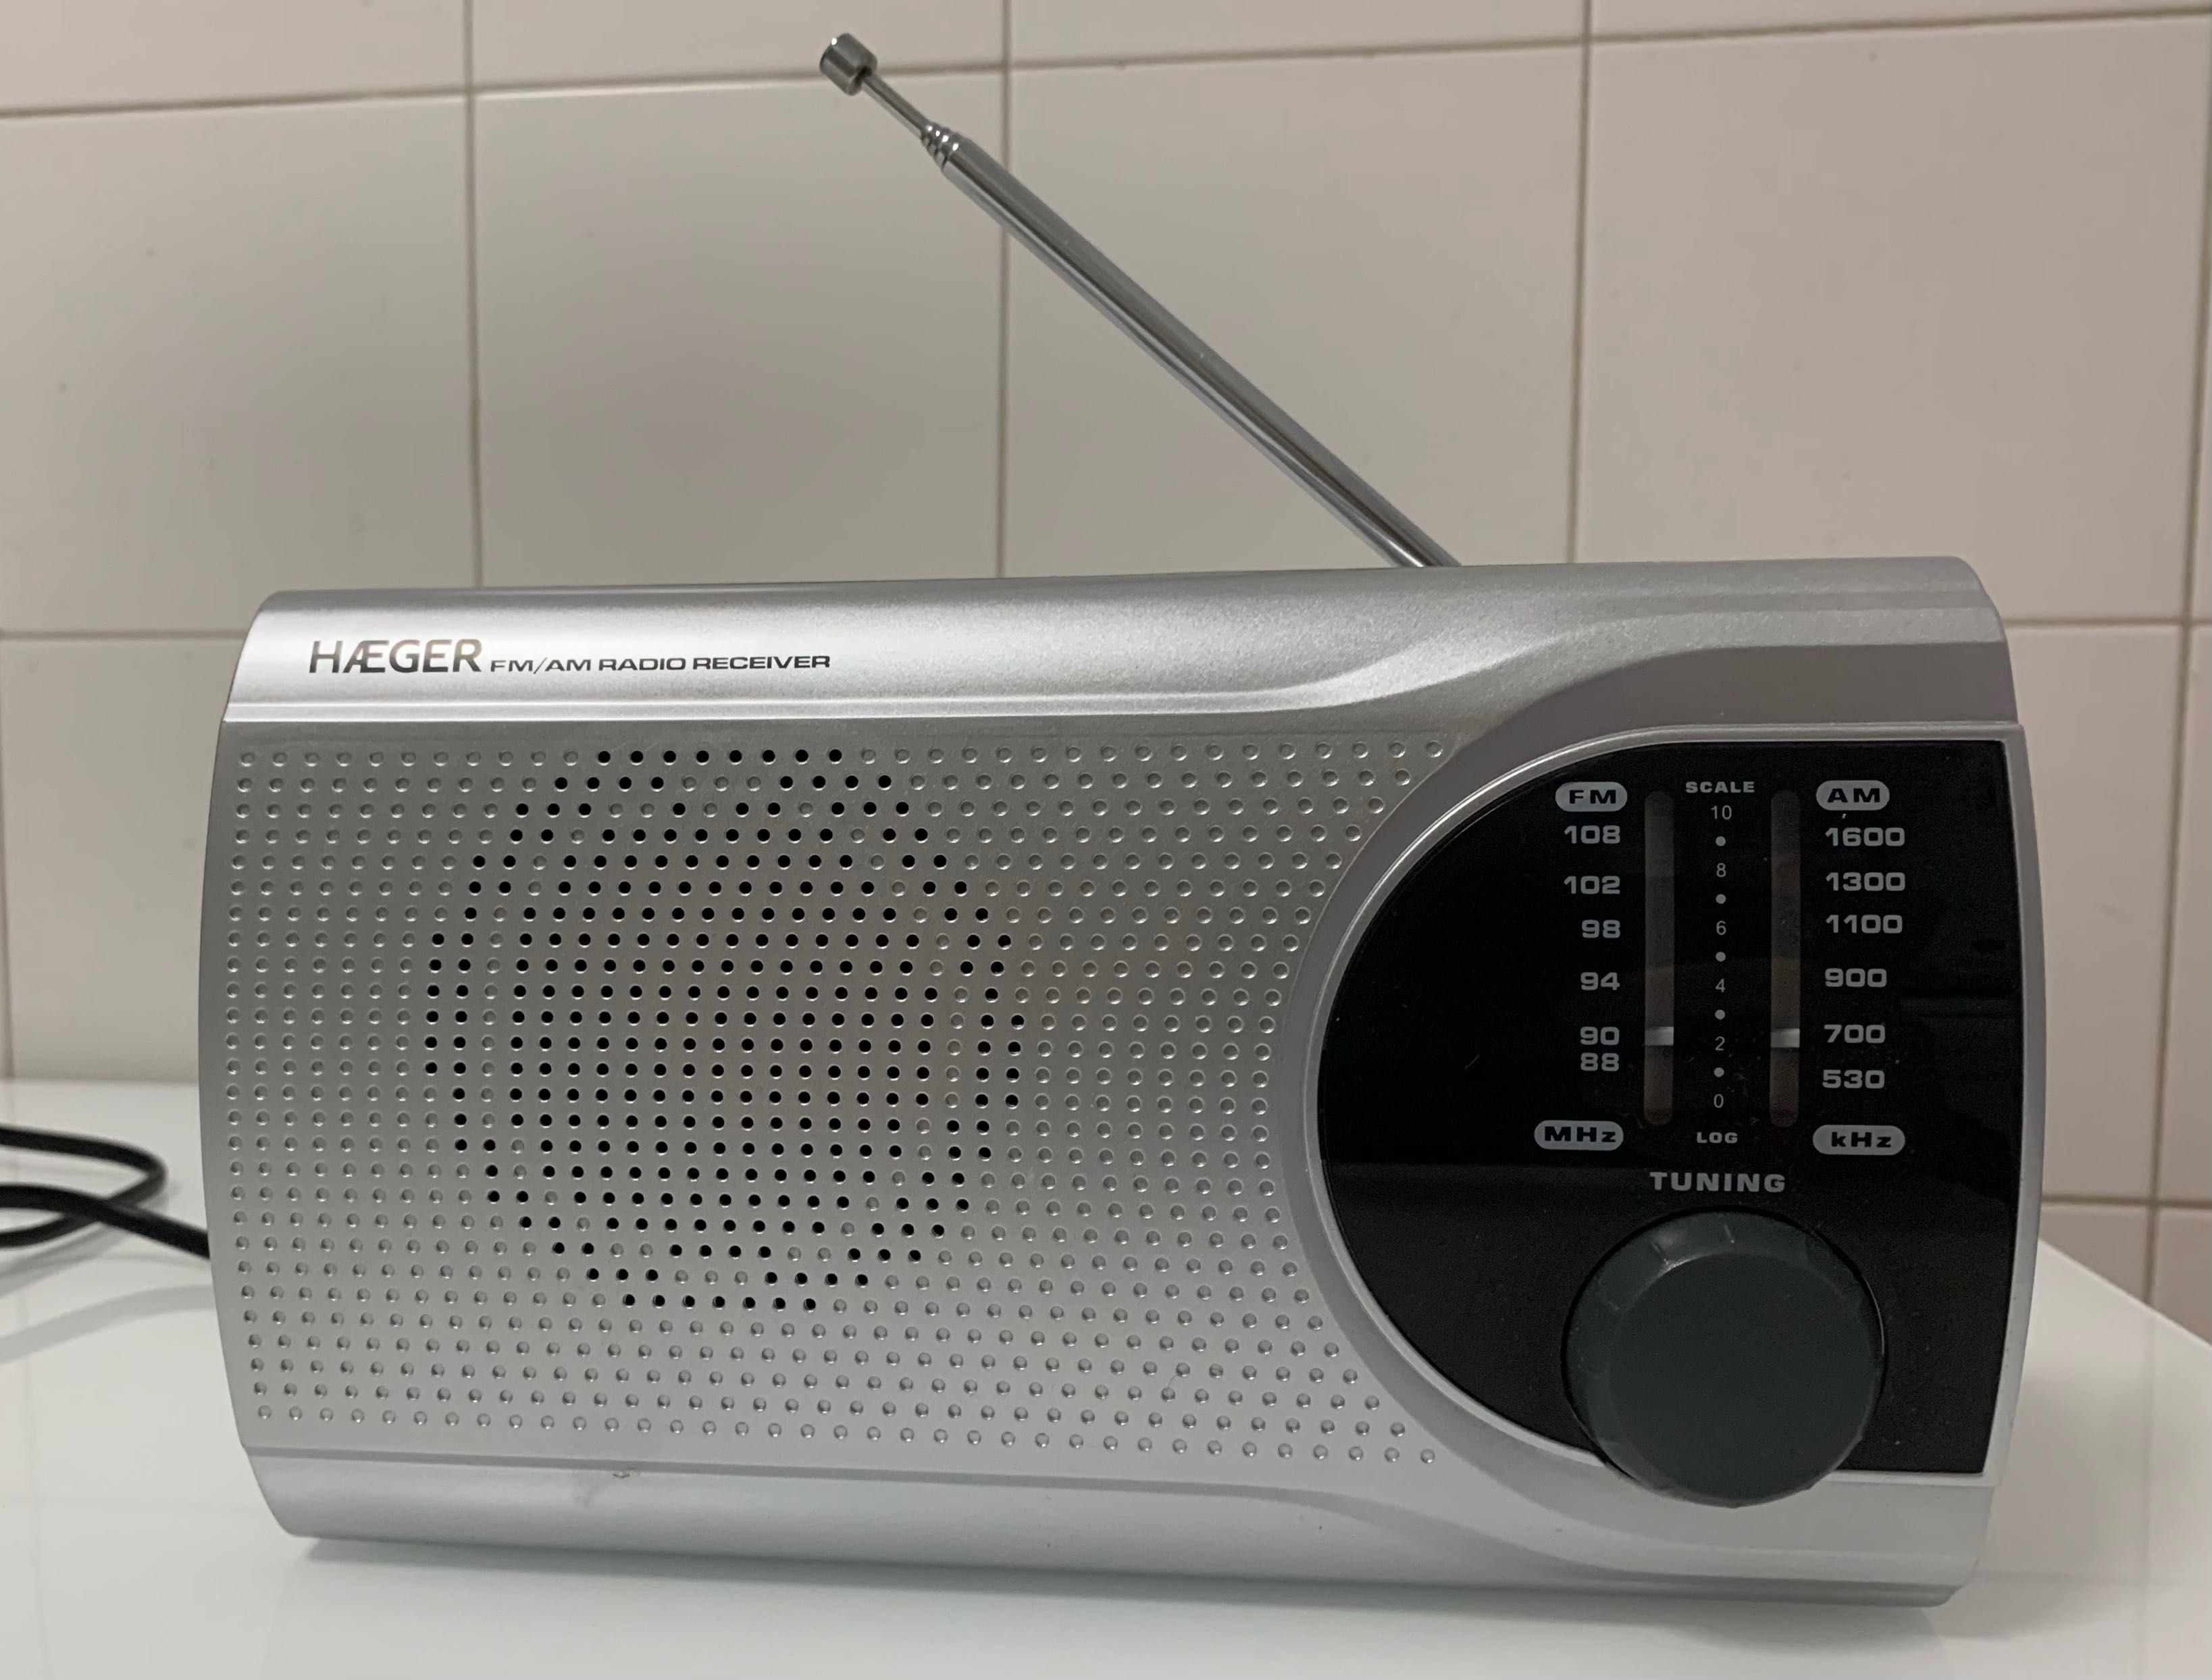 Rádio portátil SURROUND - AM/FM Haeger